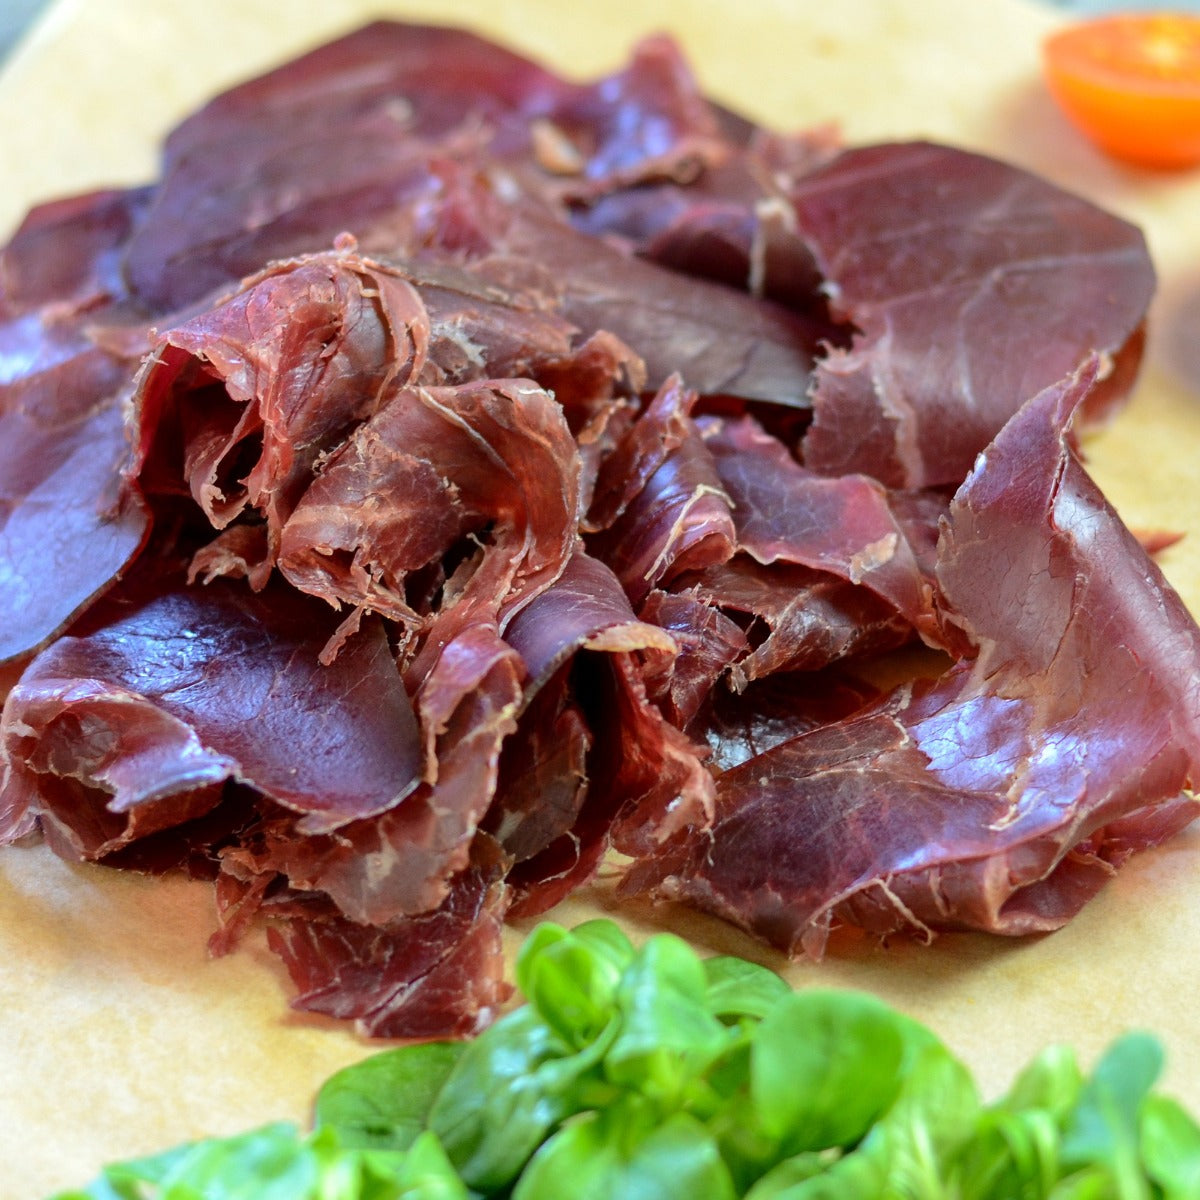 Cecina Premium Reserve beef - Smoked dried beef